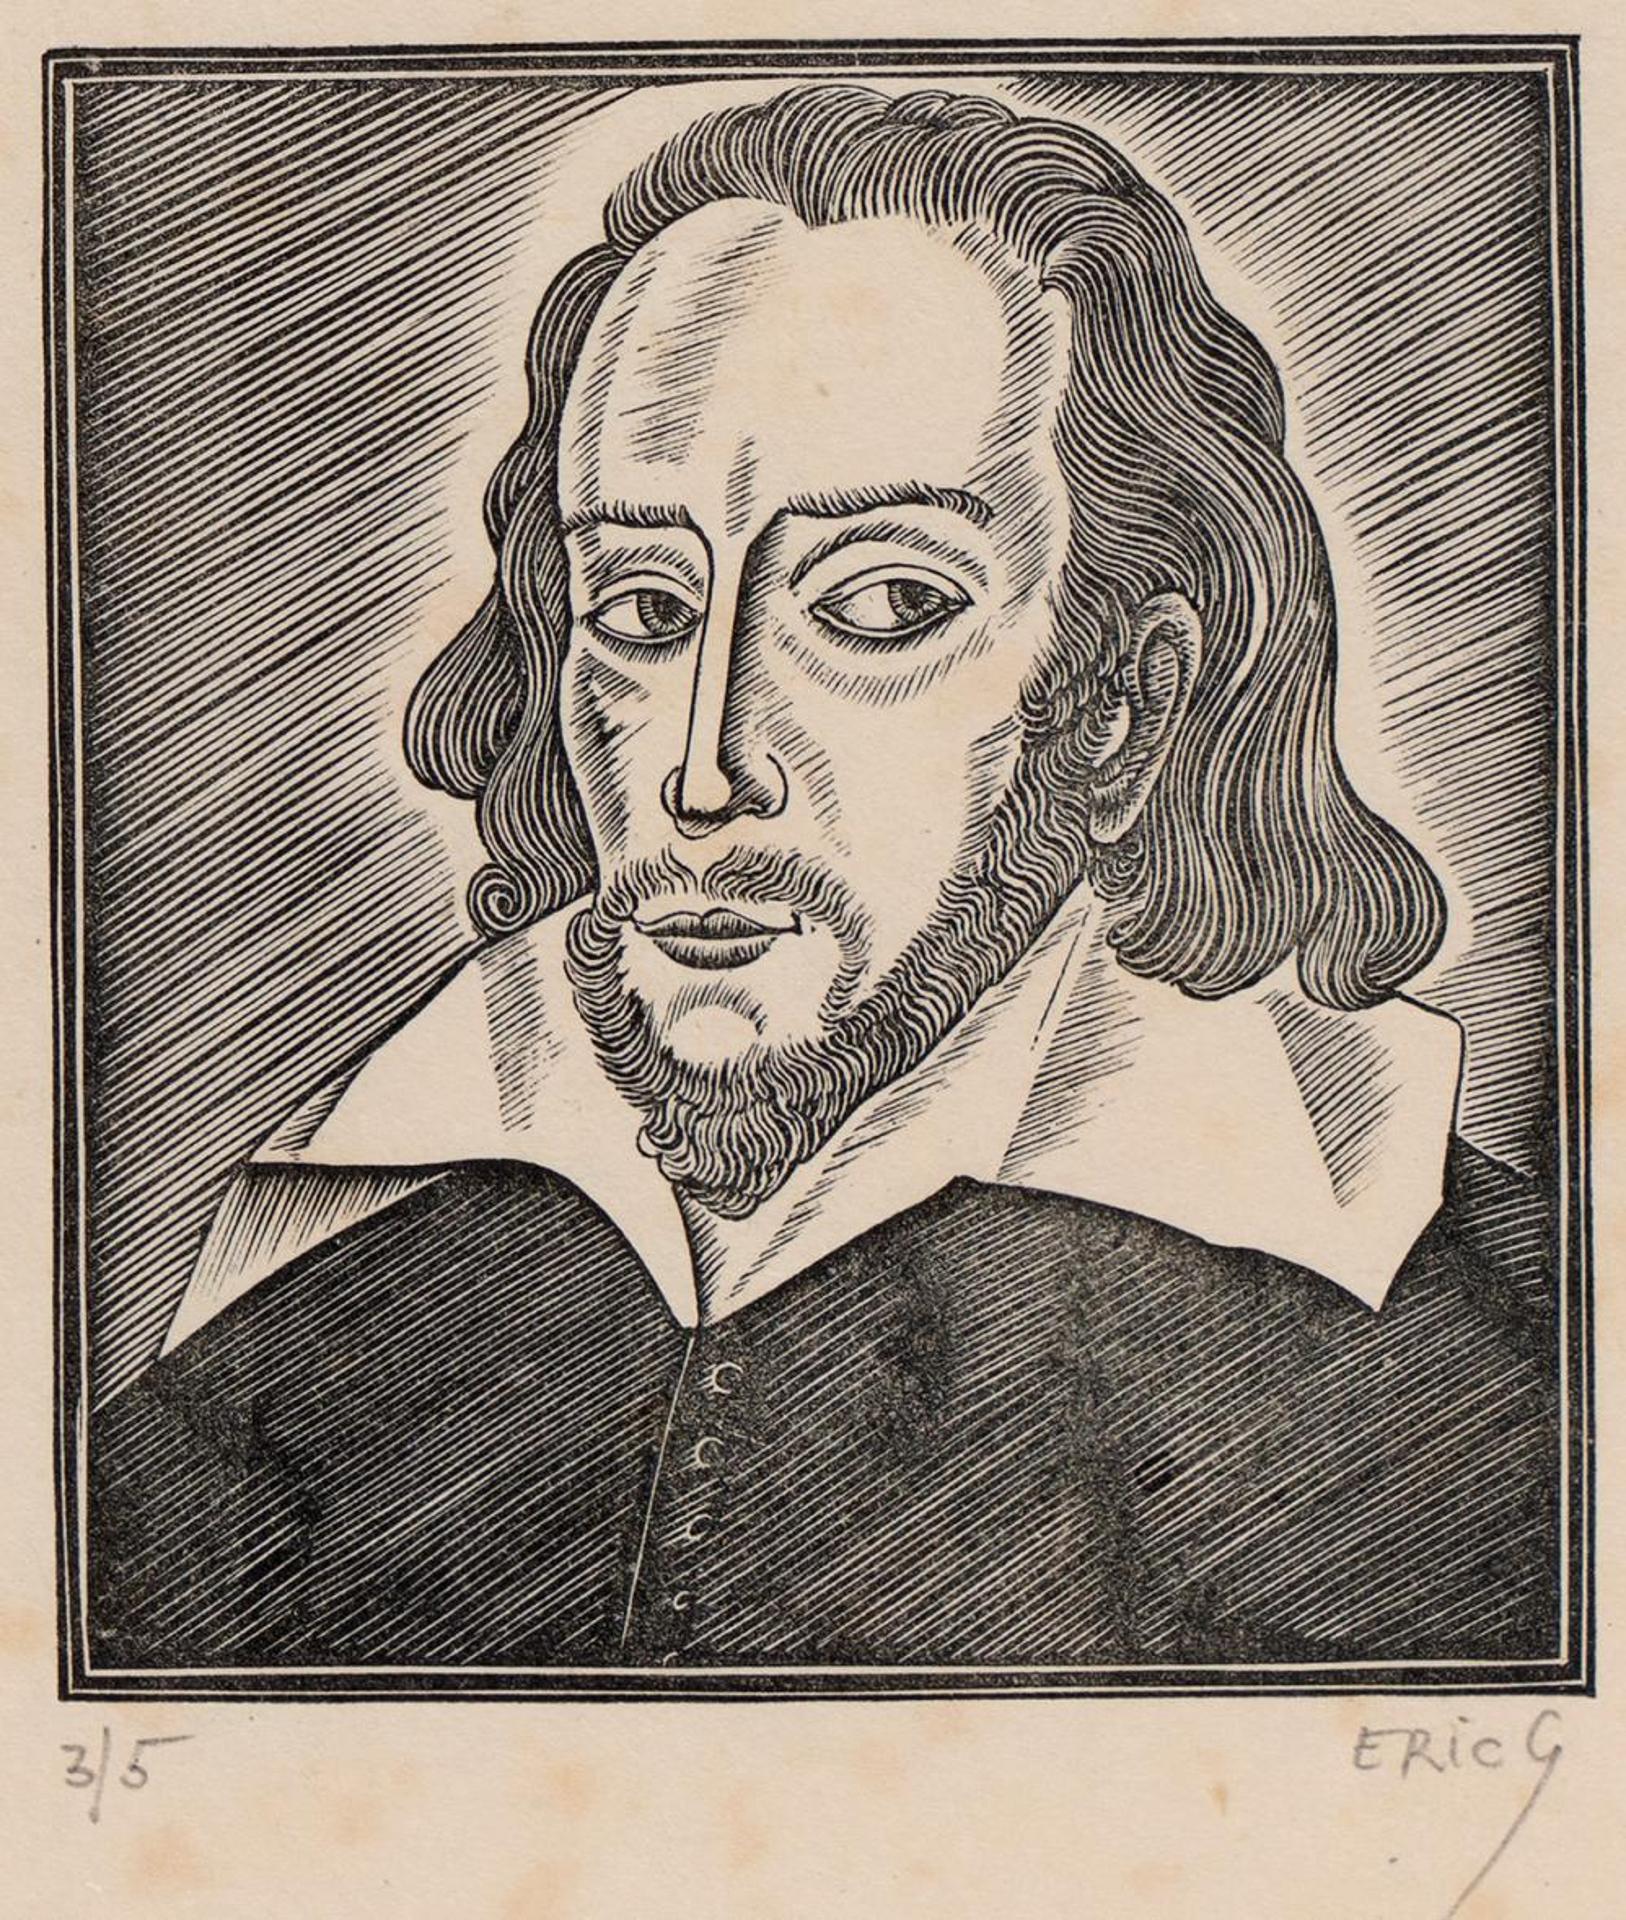 Eric Gill (1882-1940) - Untitled - Portrait of William Shakespeare